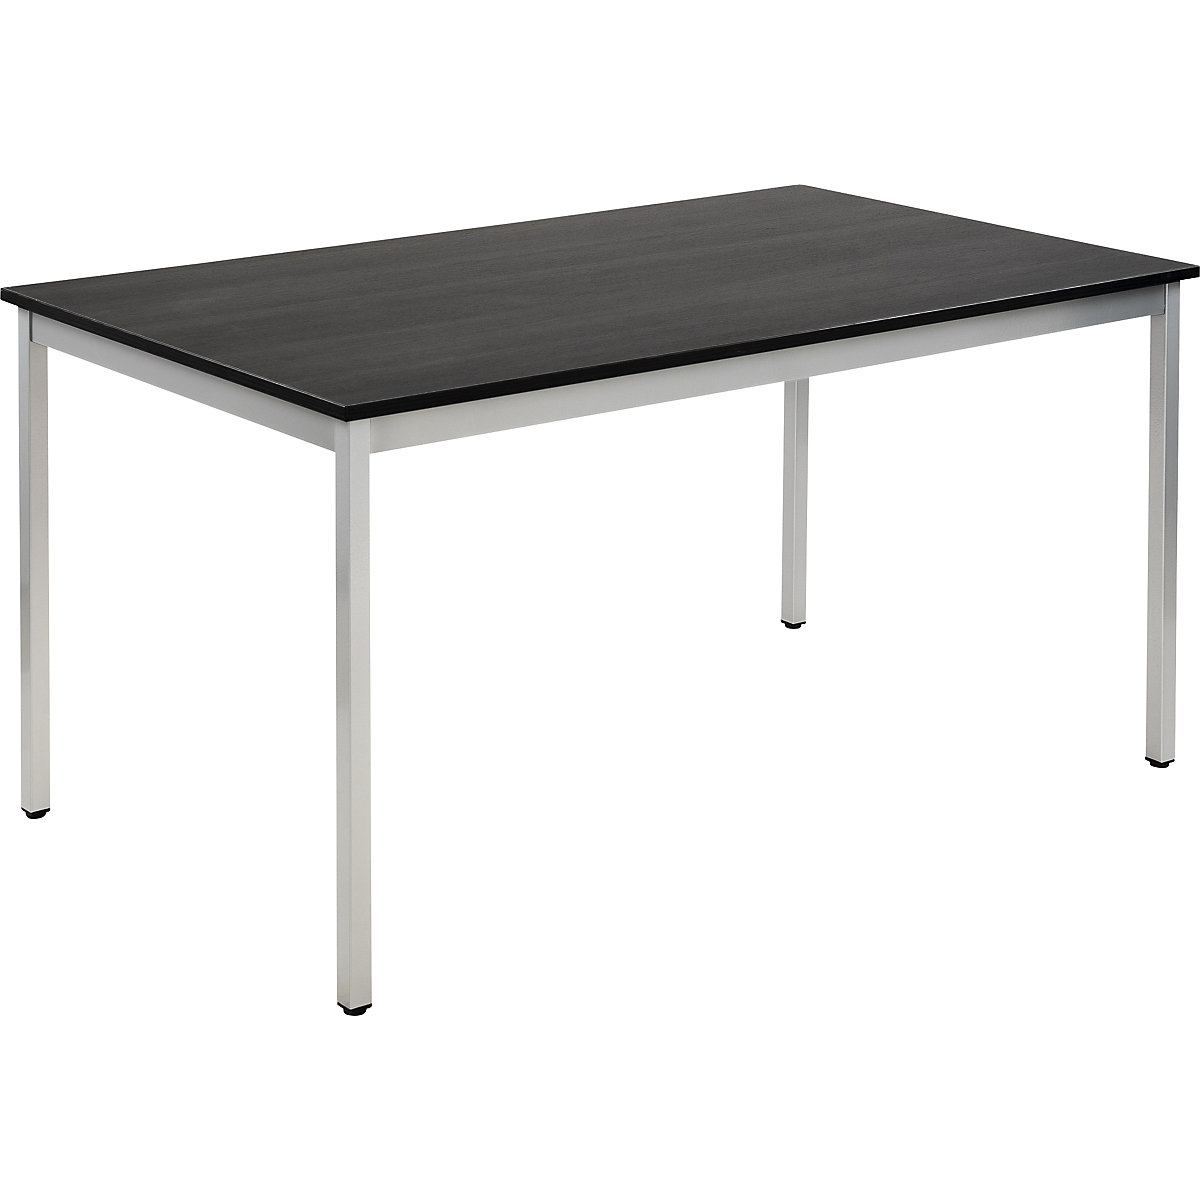 Universele tafel – eurokraft basic, rechthoekig, b x h = 1400 x 740 mm, diepte 800 mm, blad essenhoutdecor donkergrijs, onderstel blank aluminiumkleurig-18